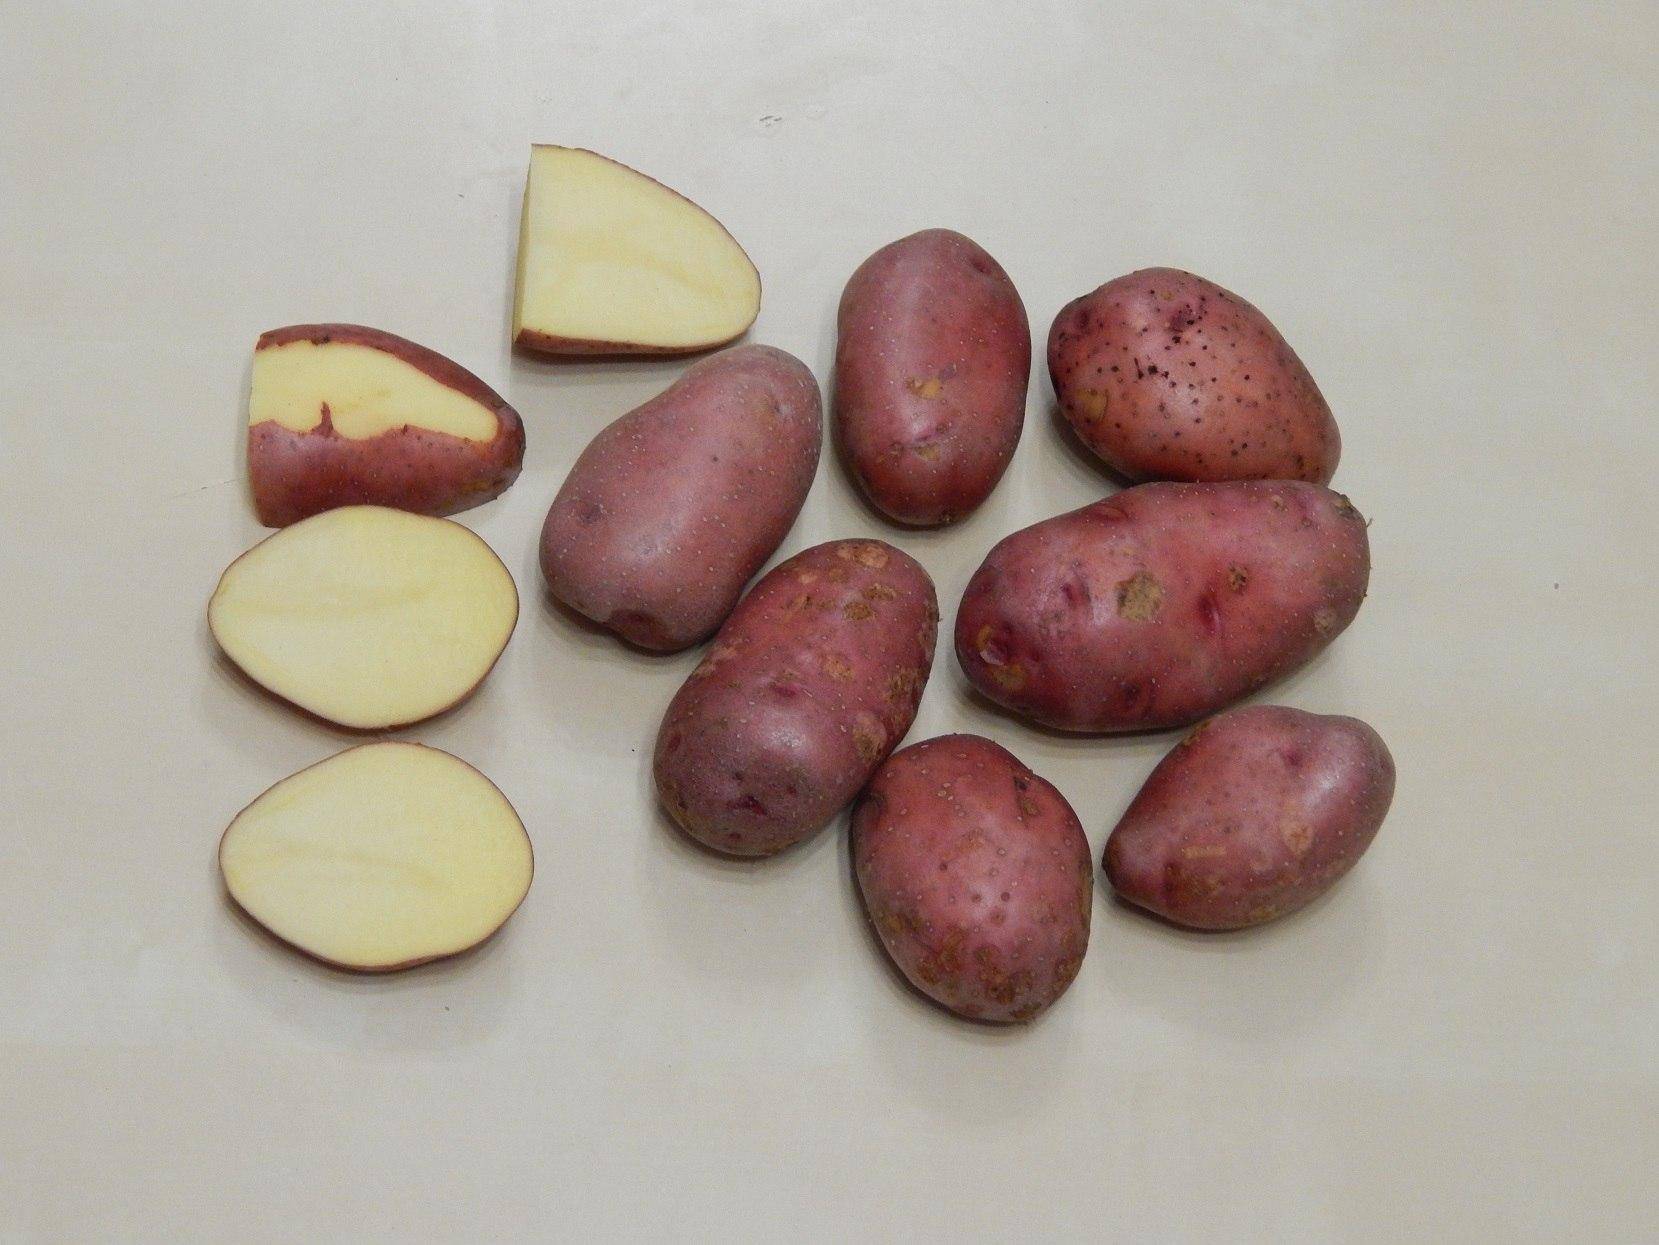 ᐉ сорта картофеля для волго-вятского региона: список - roza-zanoza.ru